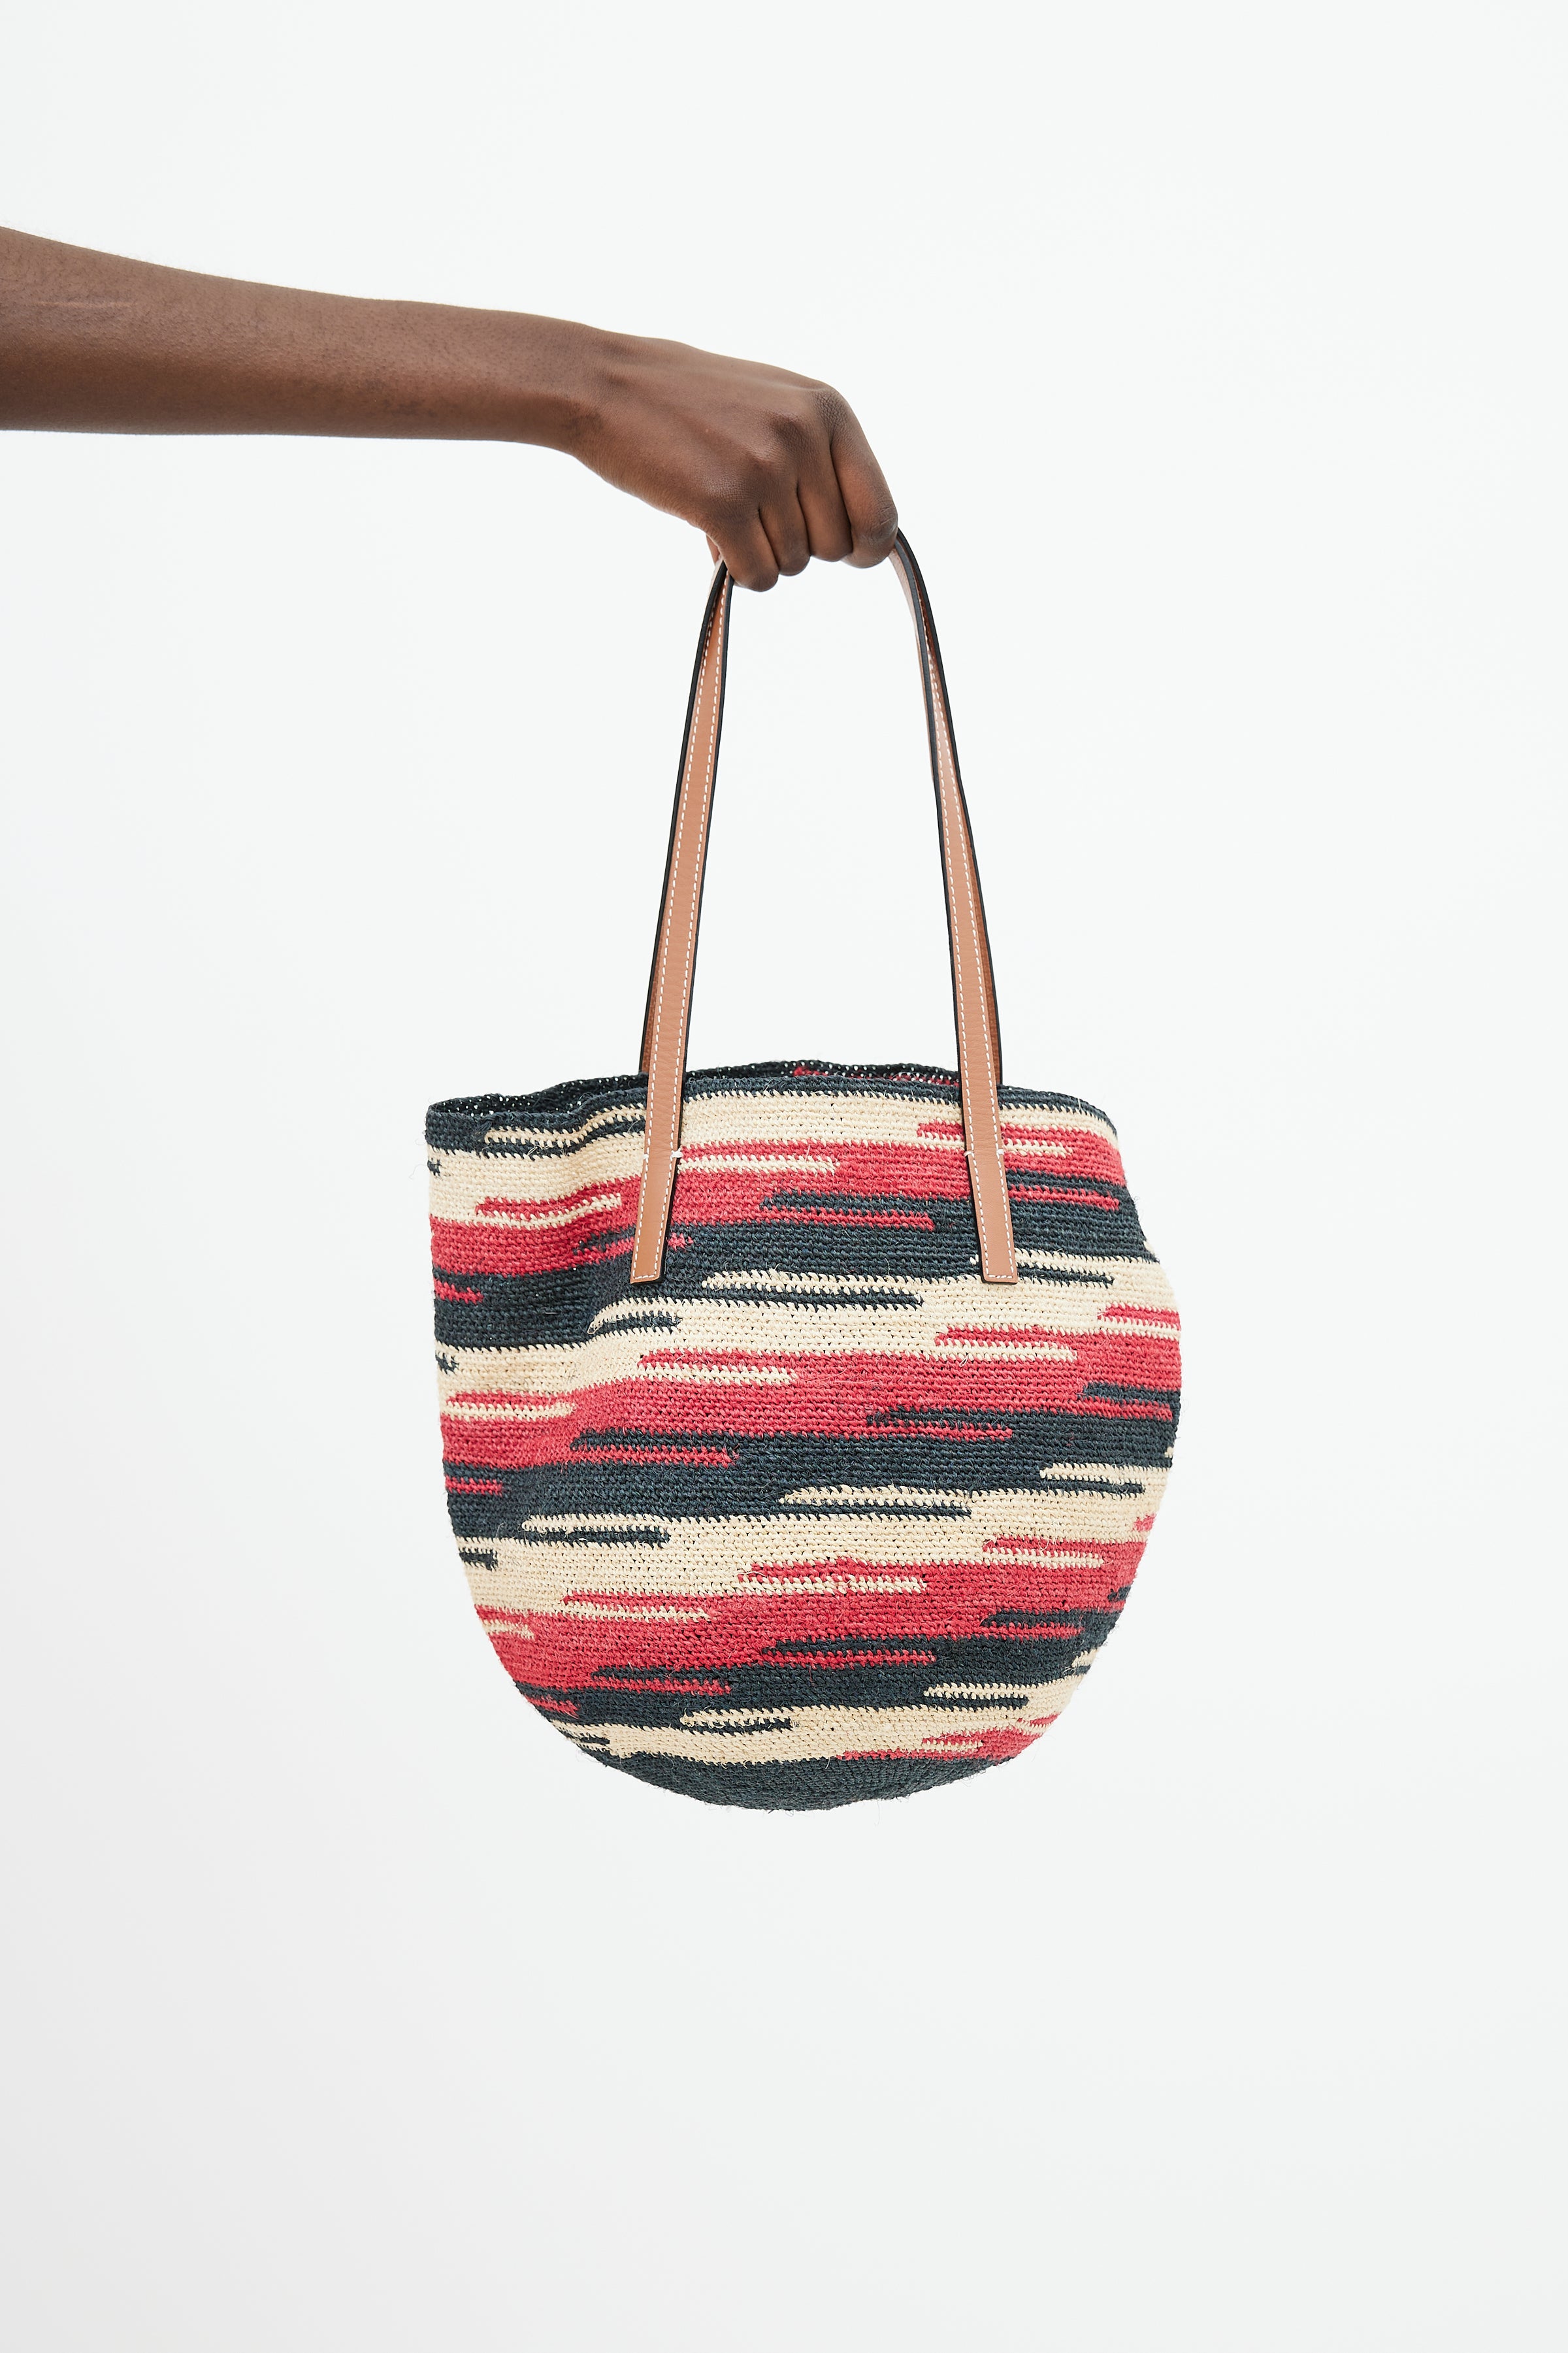 Loewe x Paula Ibiza Bags, our Basket Bag collection